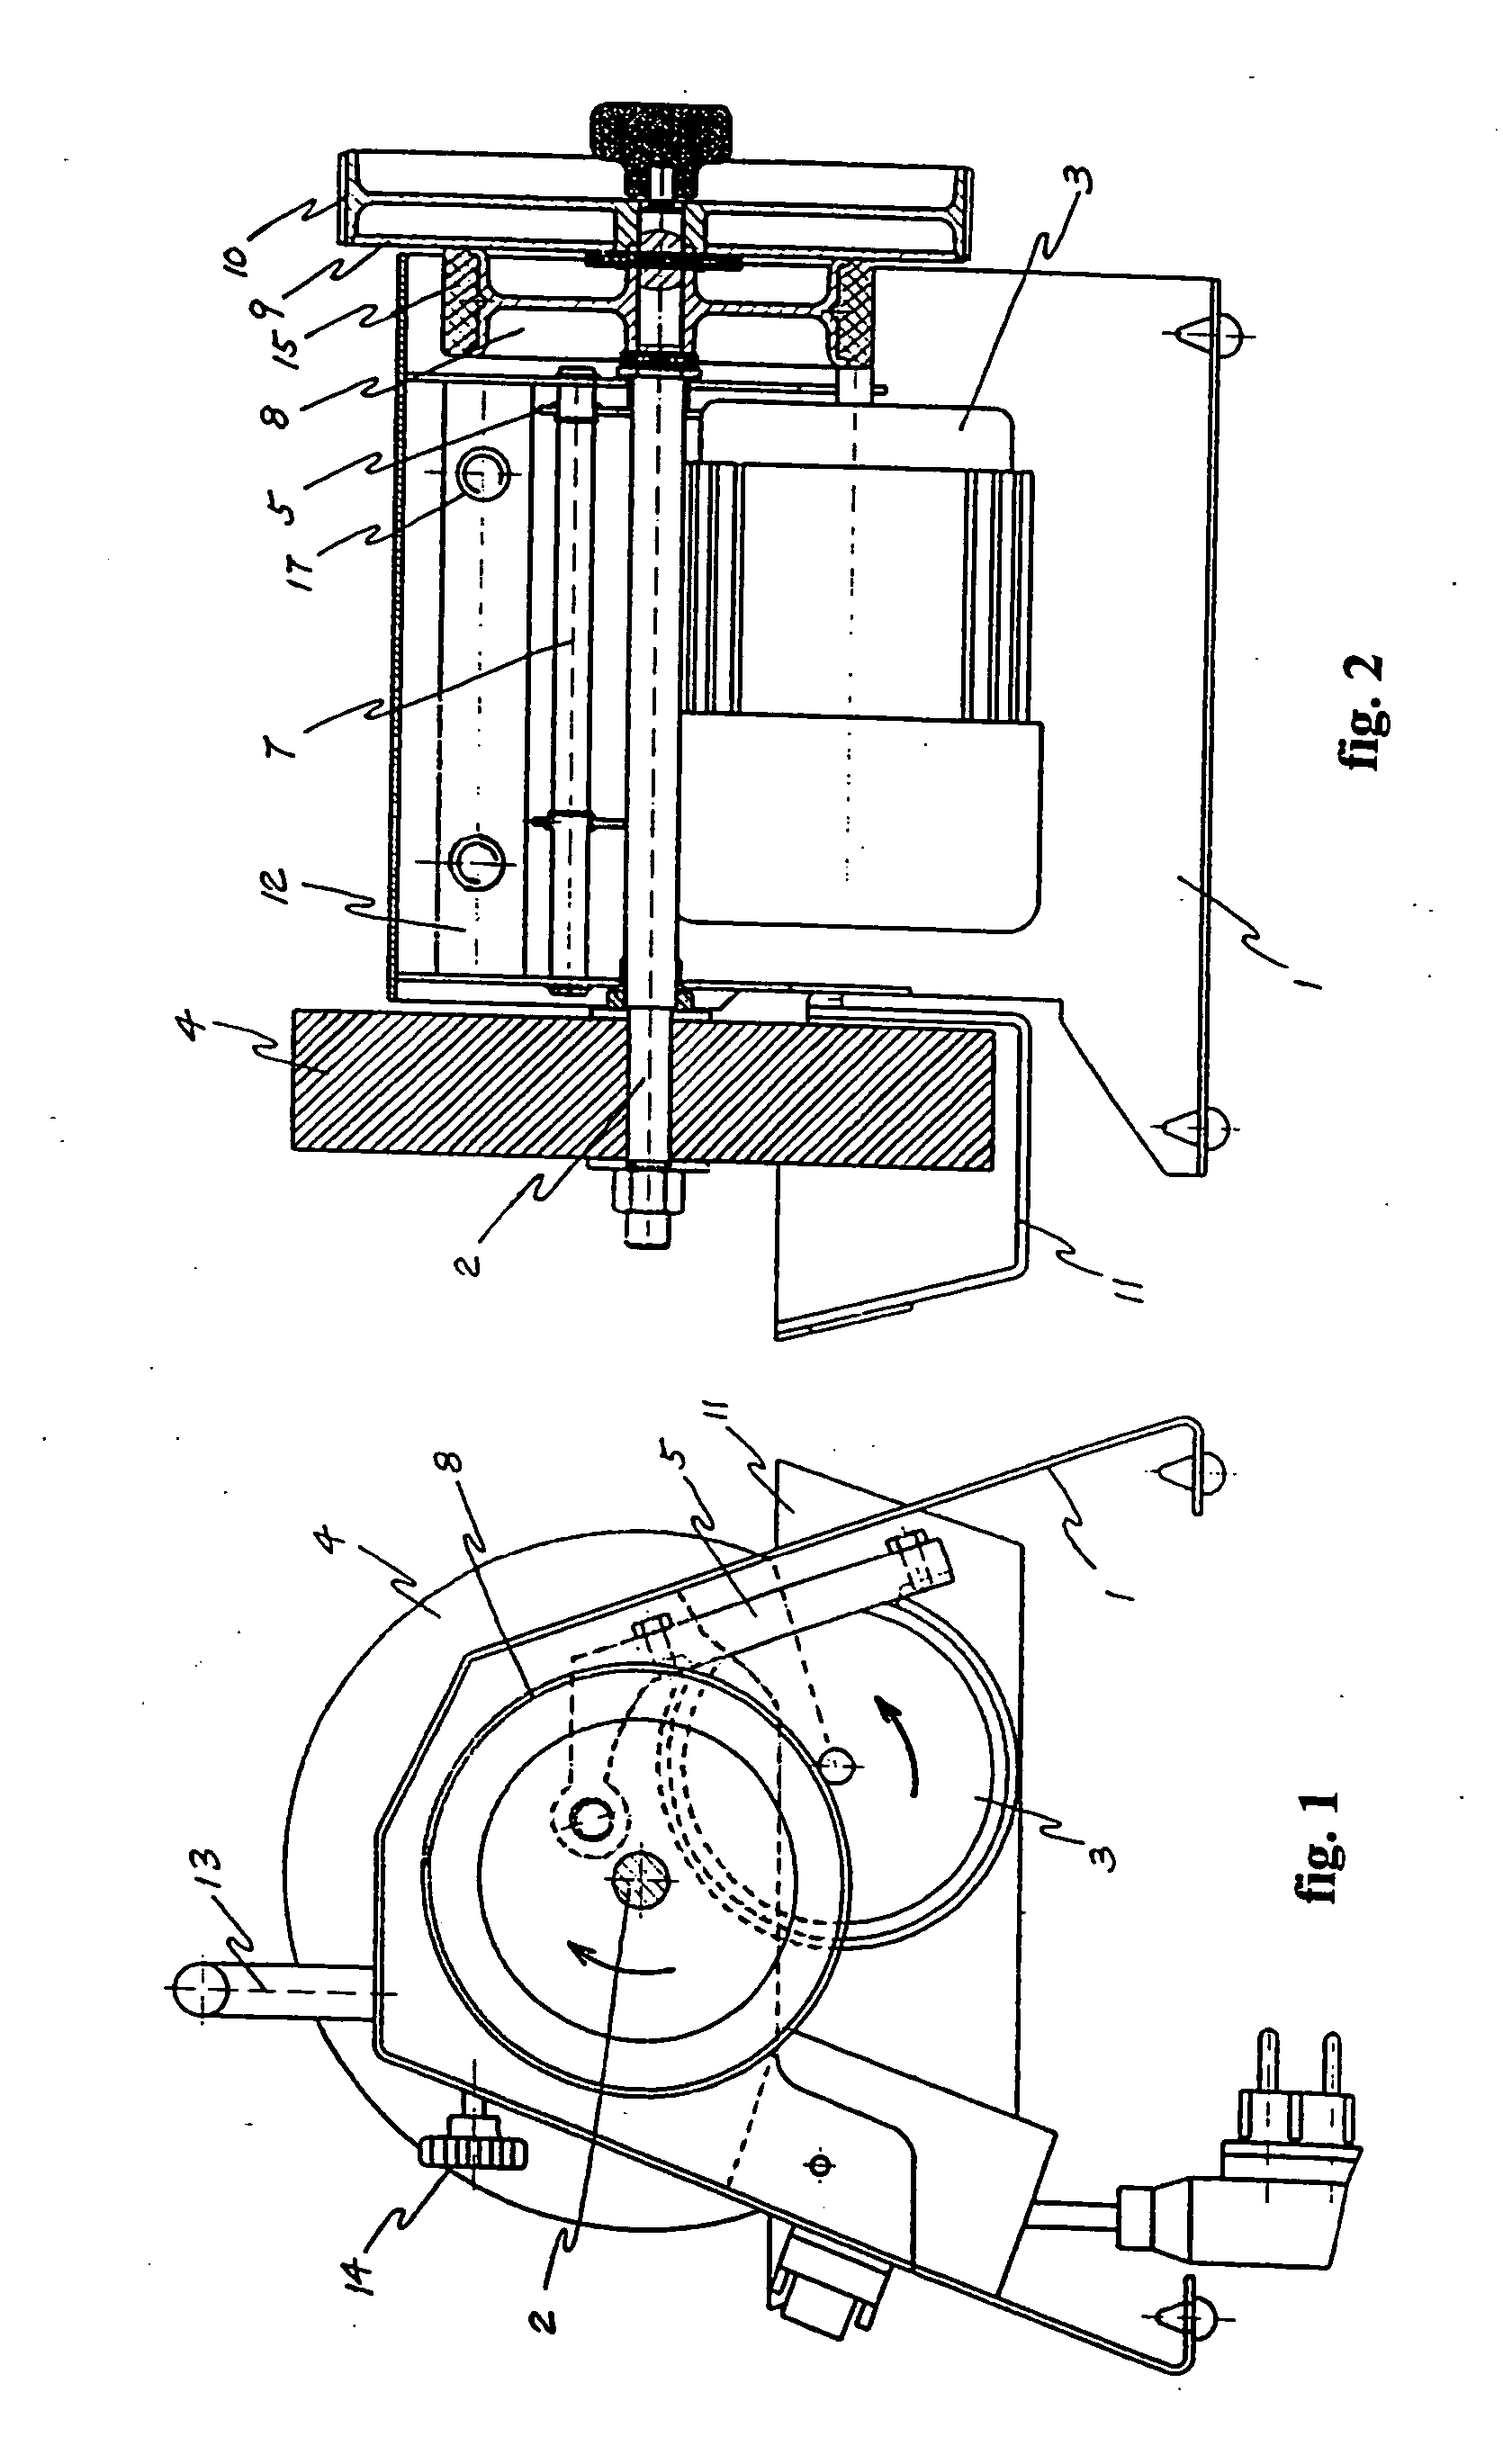 Electric sharpener